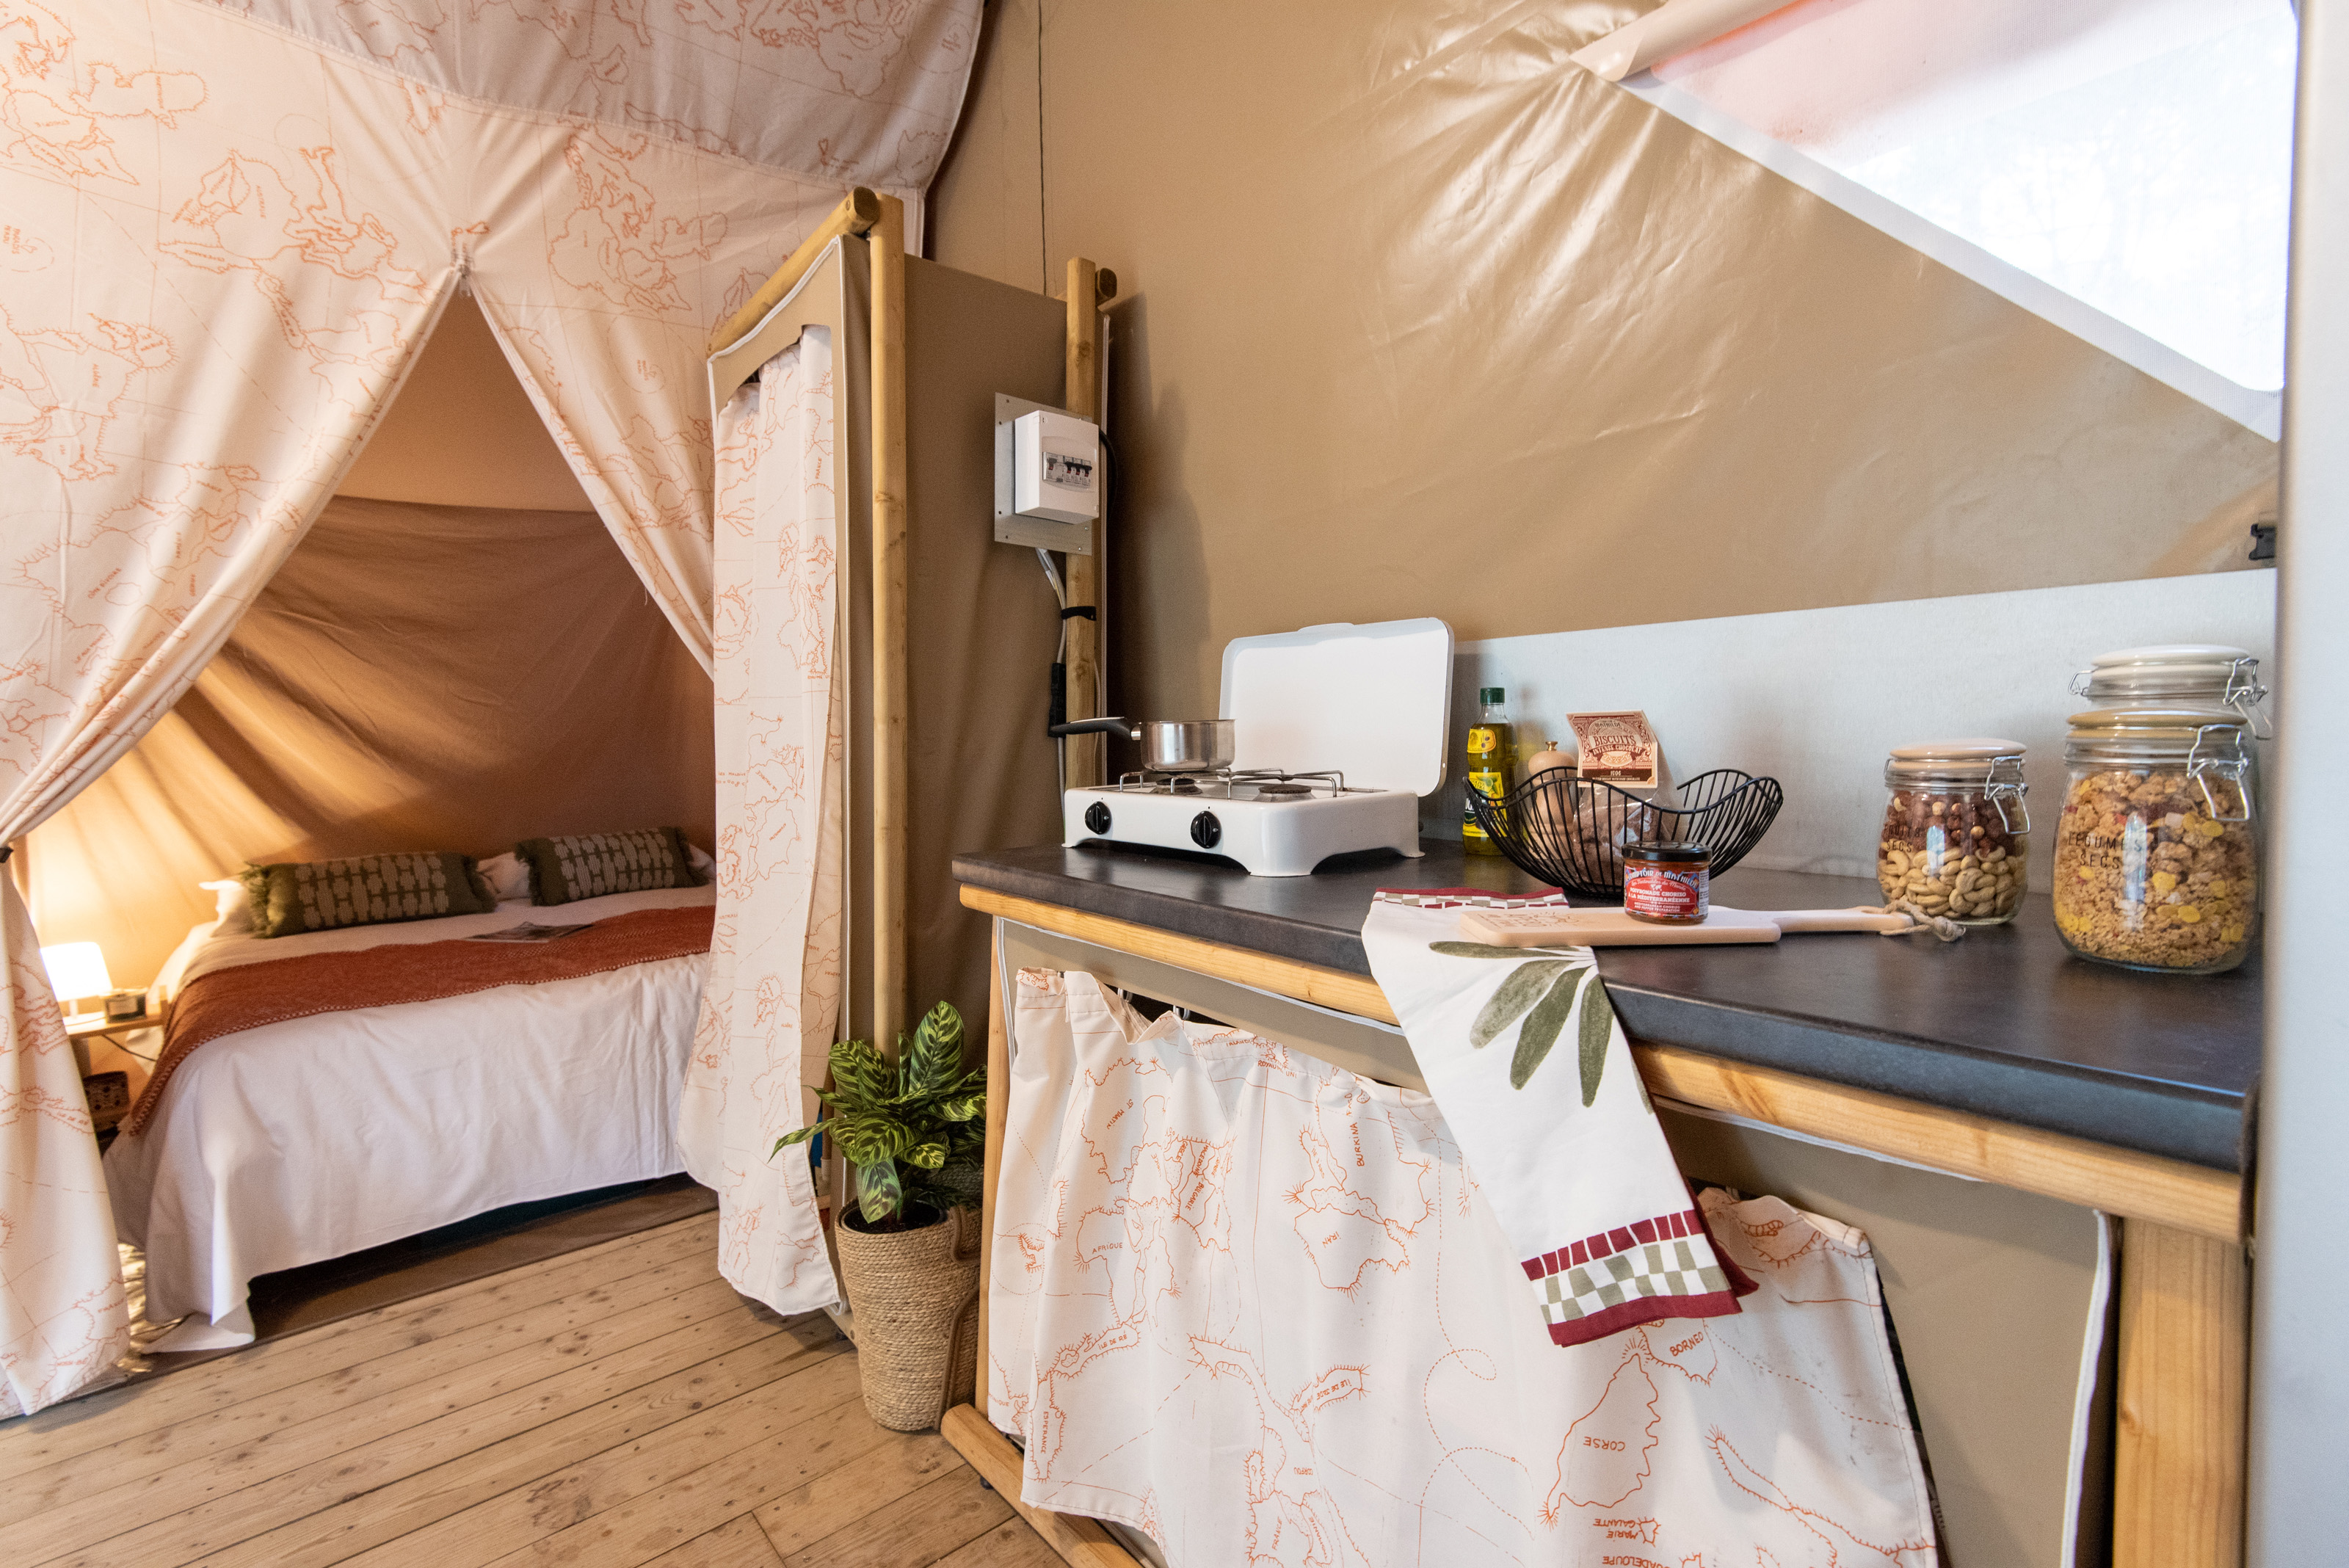 Accommodation - Tente Maori / M - Camping Campéole Le Vivier